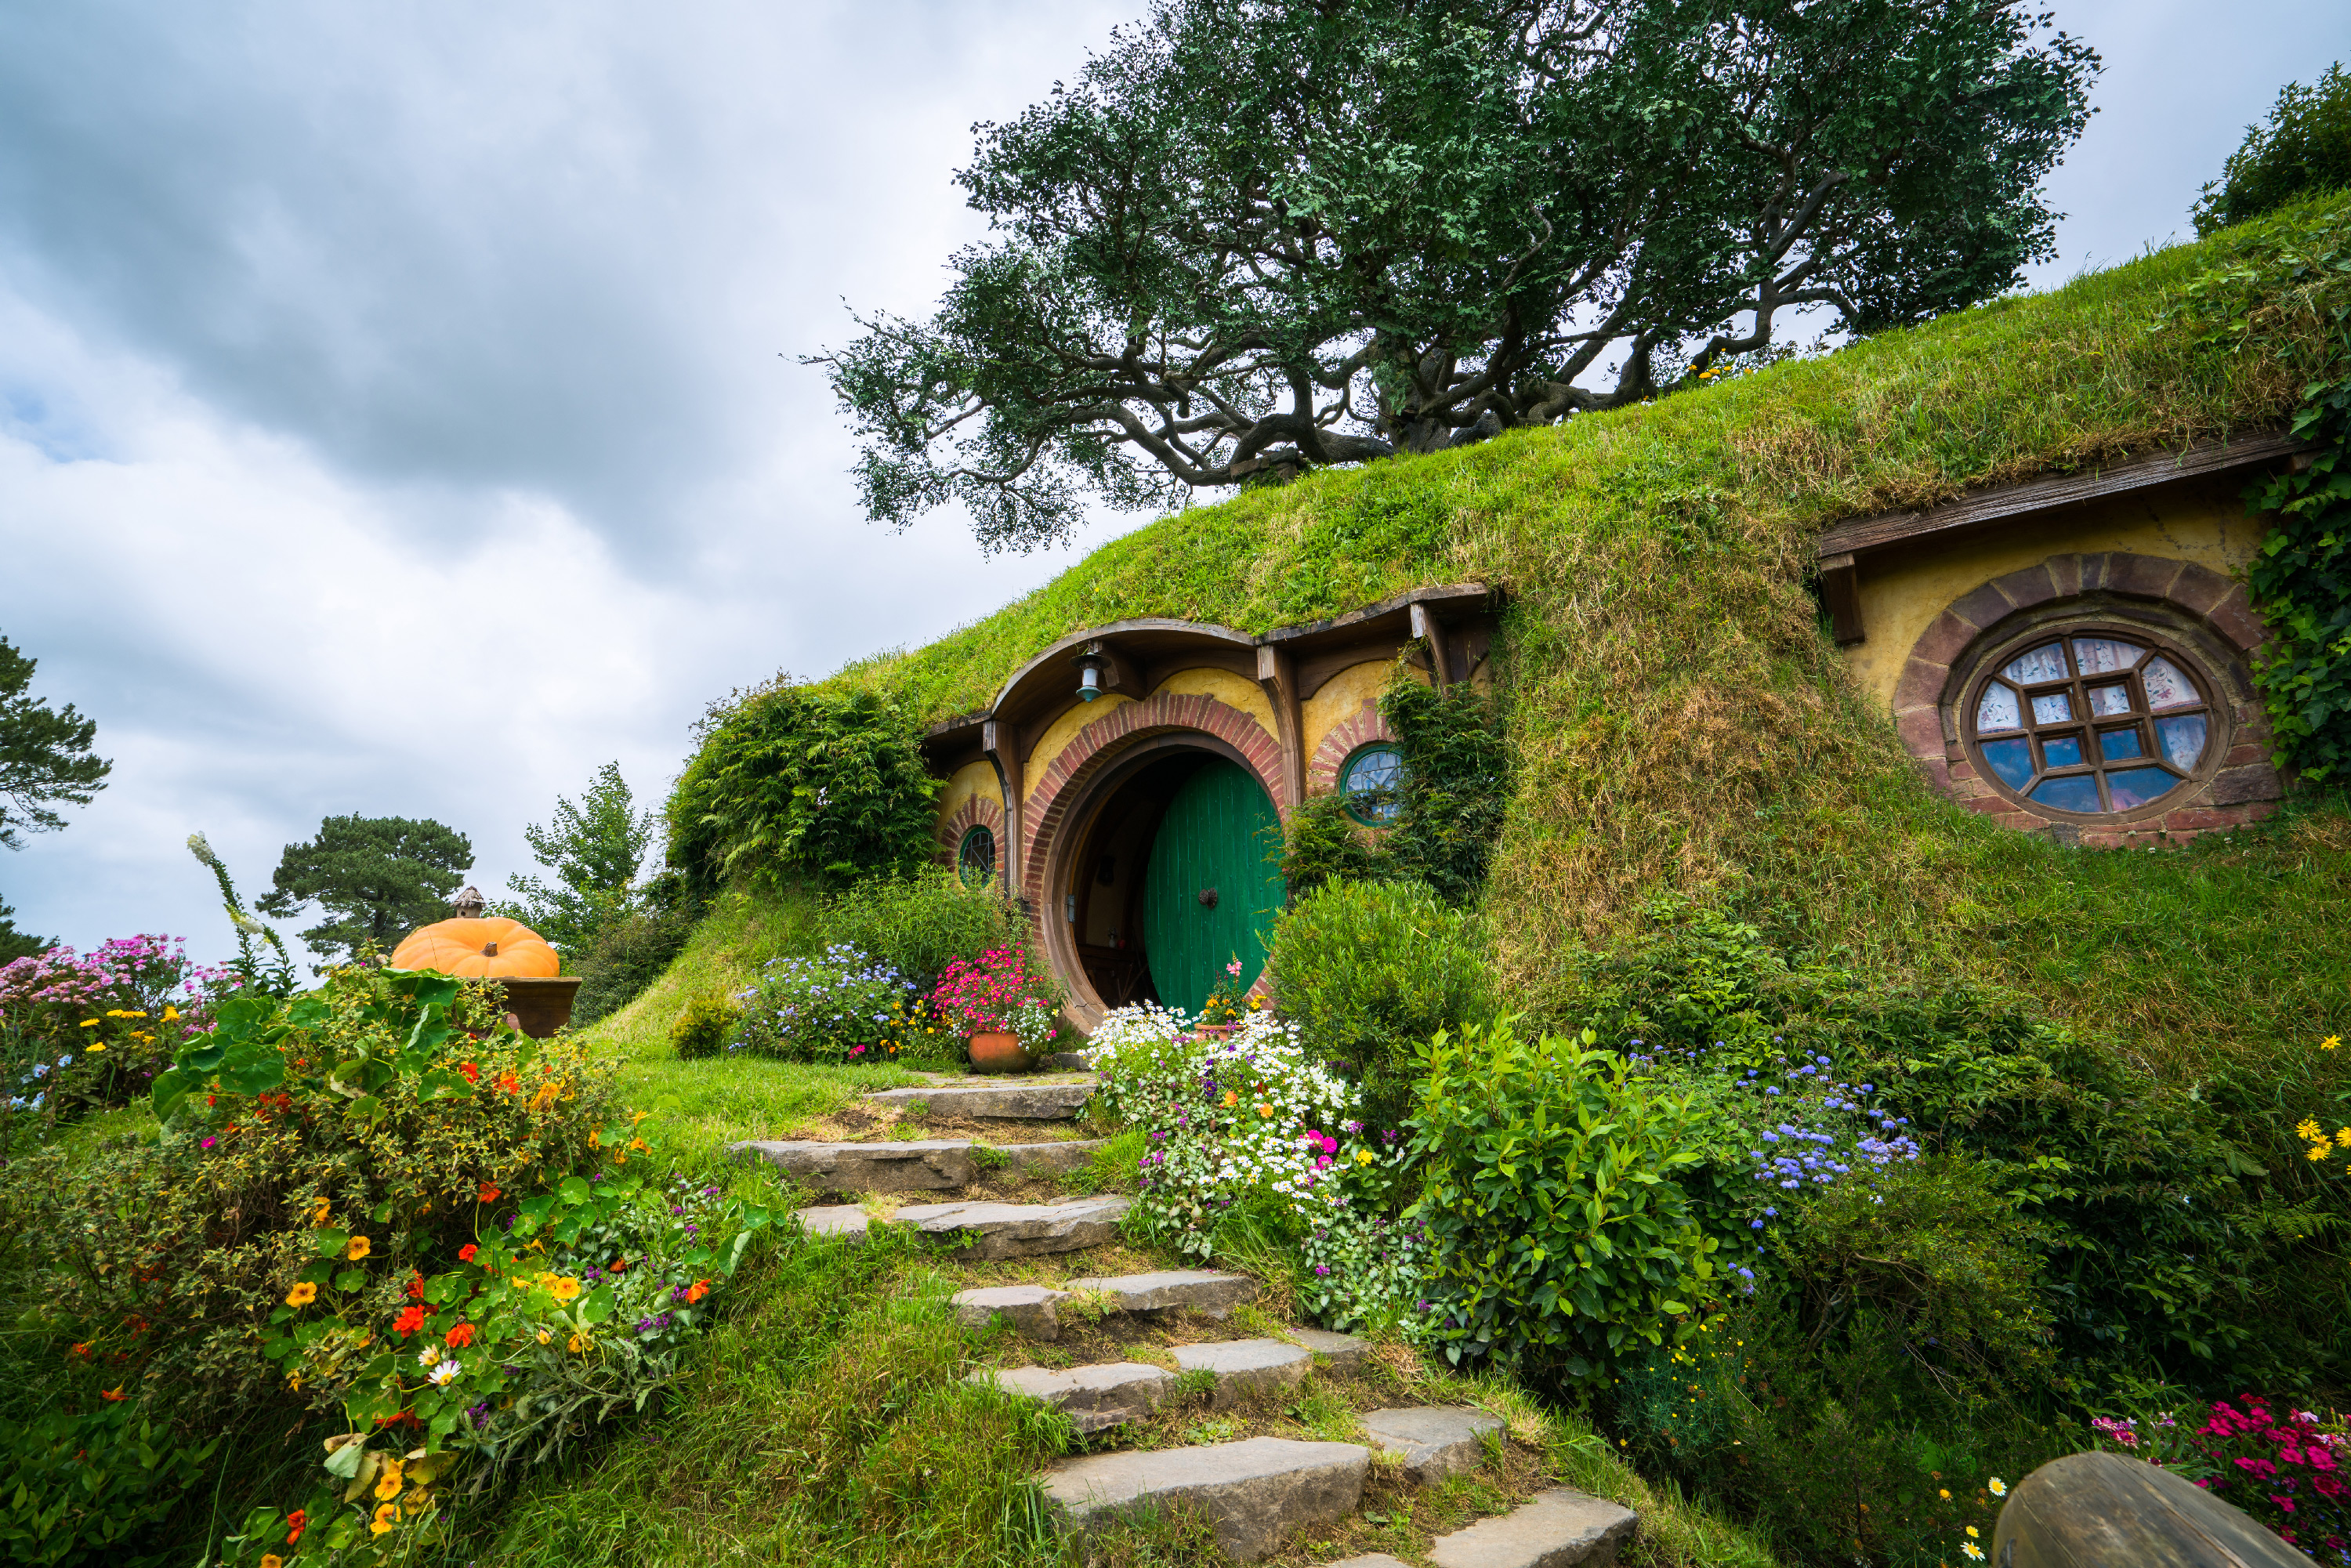 A hobbit house on a hill